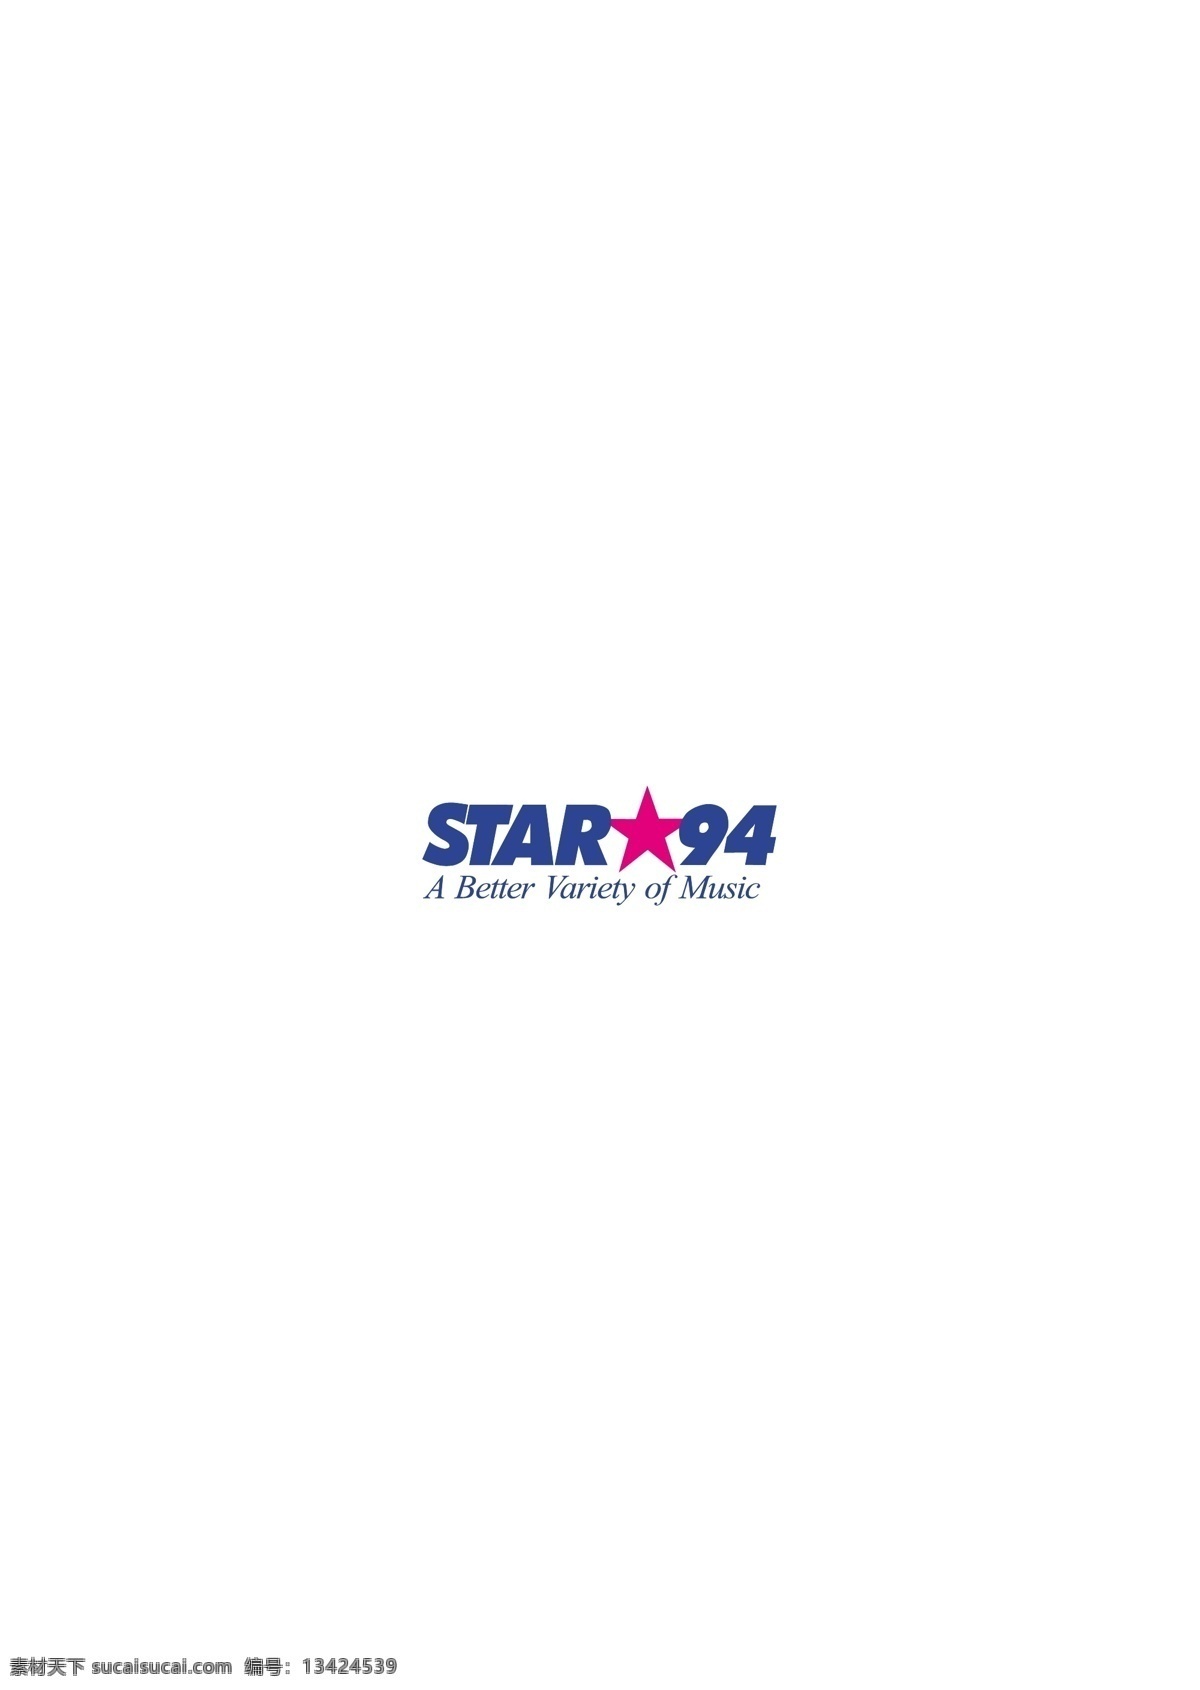 logo大全 logo 设计欣赏 star 商业矢量 矢量下载 radio 标志设计 欣赏 网页矢量 矢量图 其他矢量图